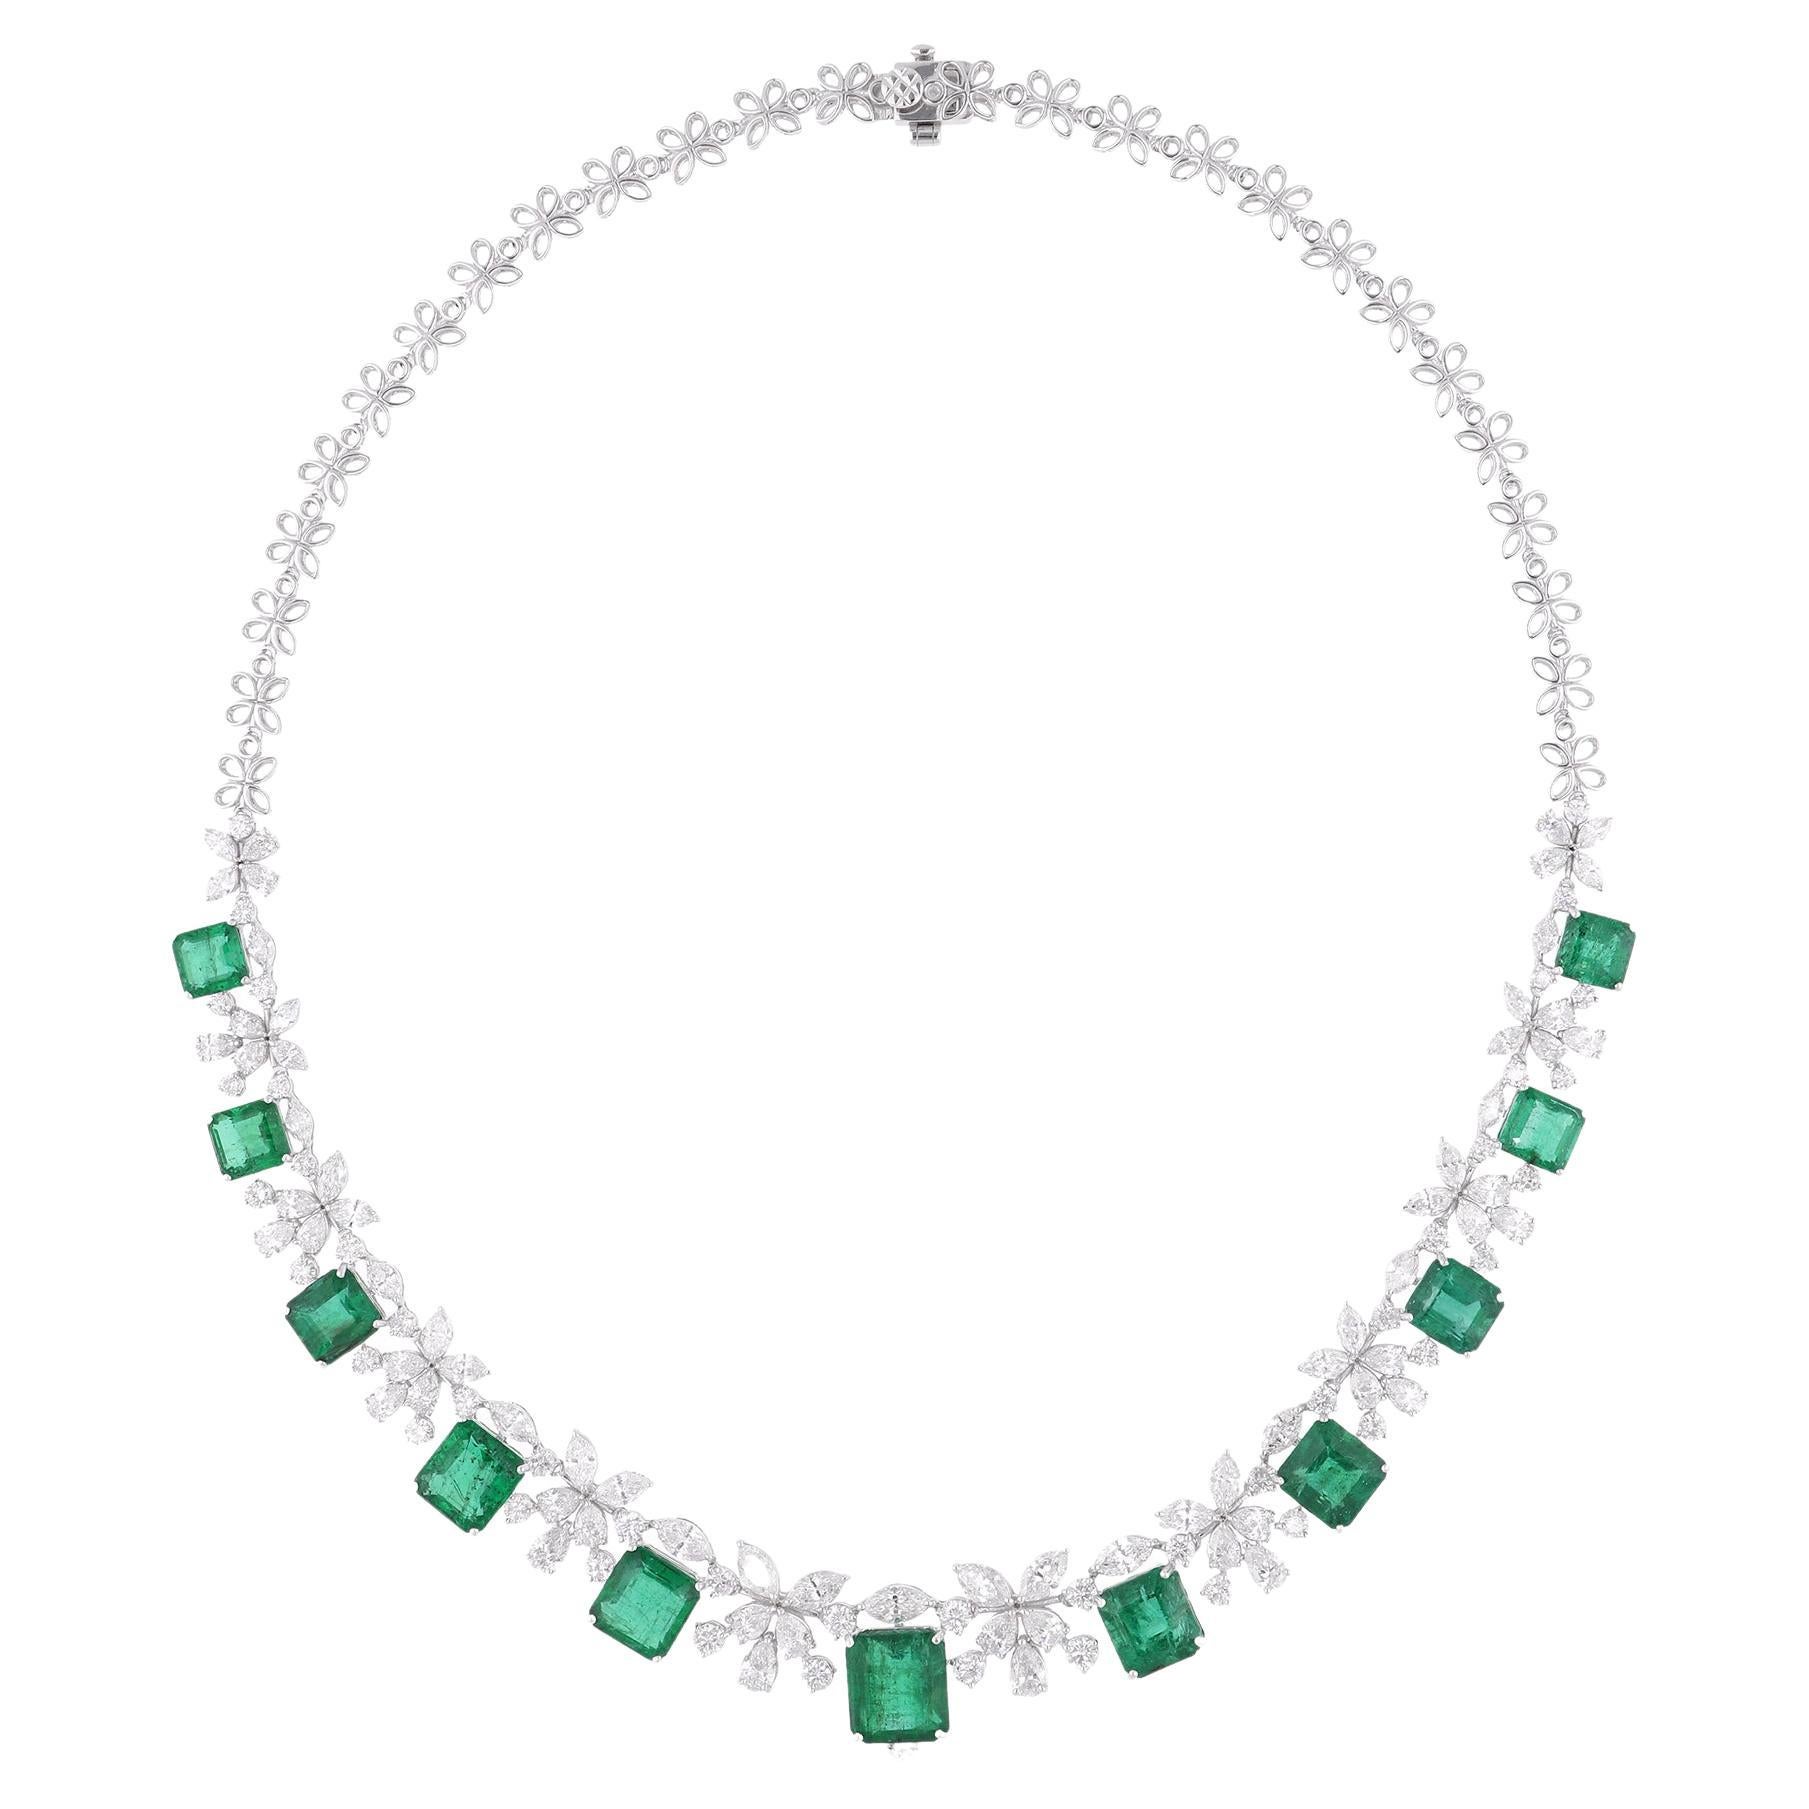 Zambian Emerald Gemstone Necklace Diamond 14 Karat White Gold Handmade Jewelry